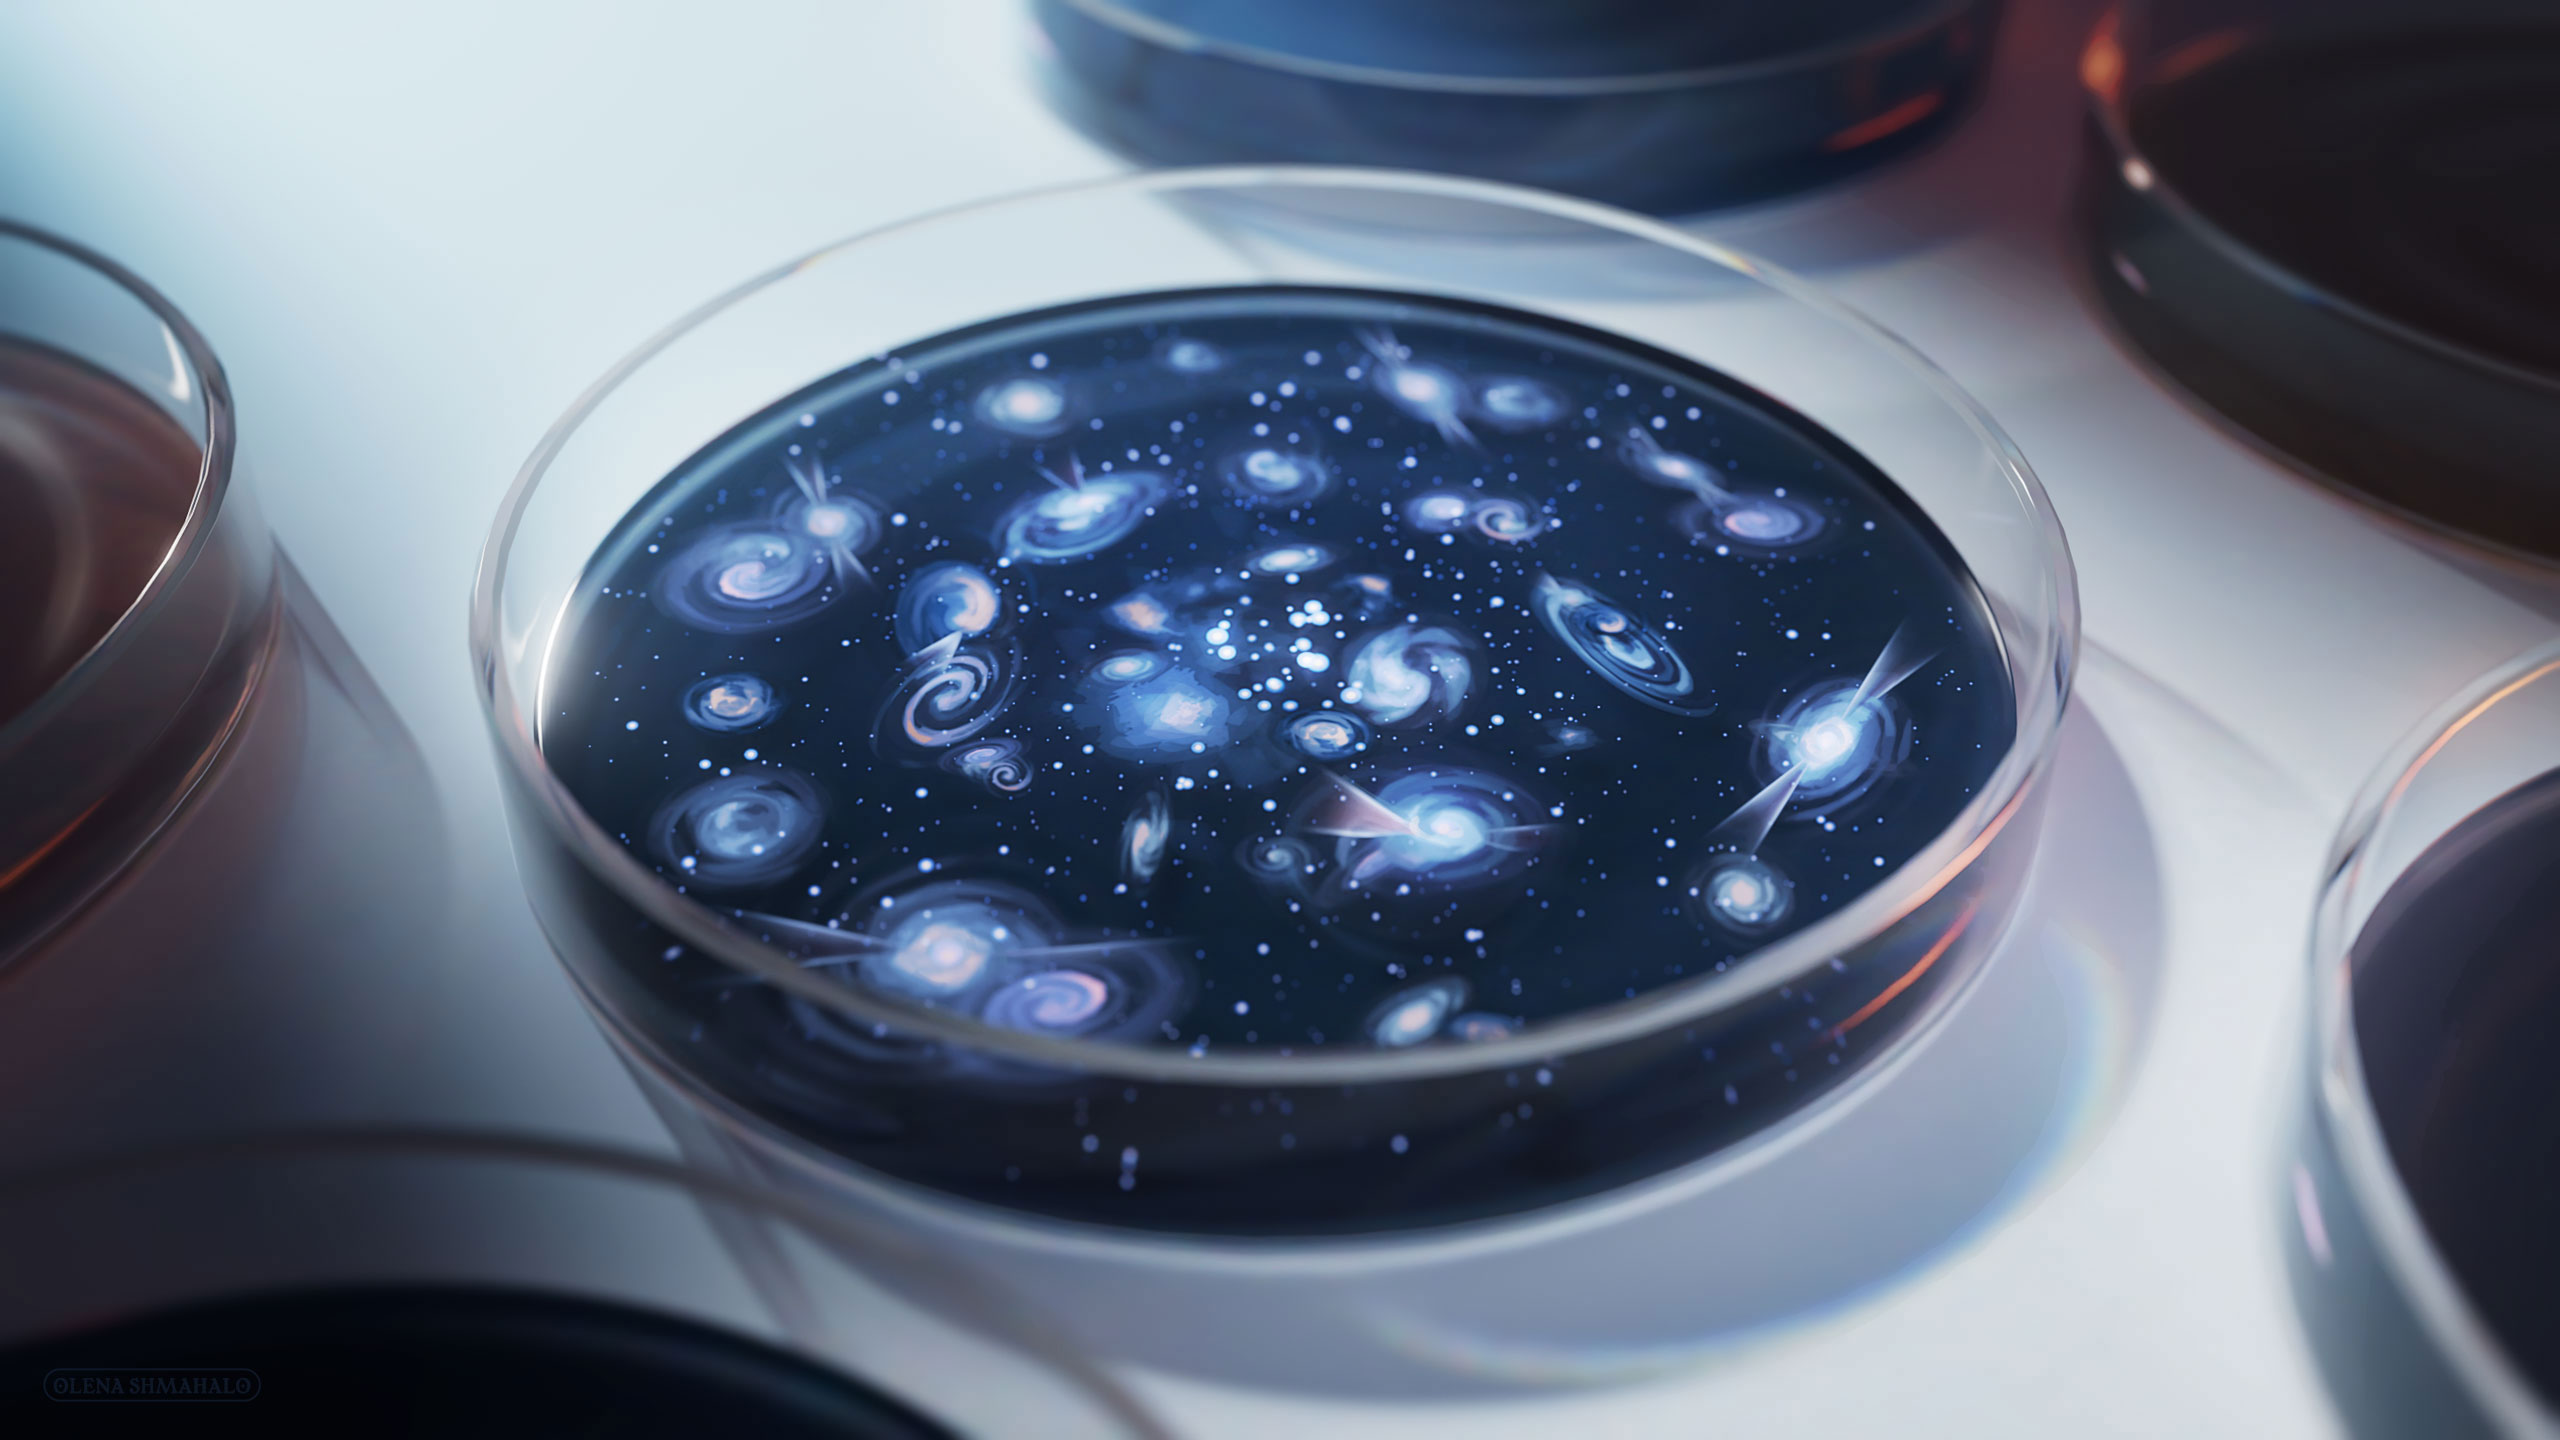 3D art of stars and galaxies in a petri dish.